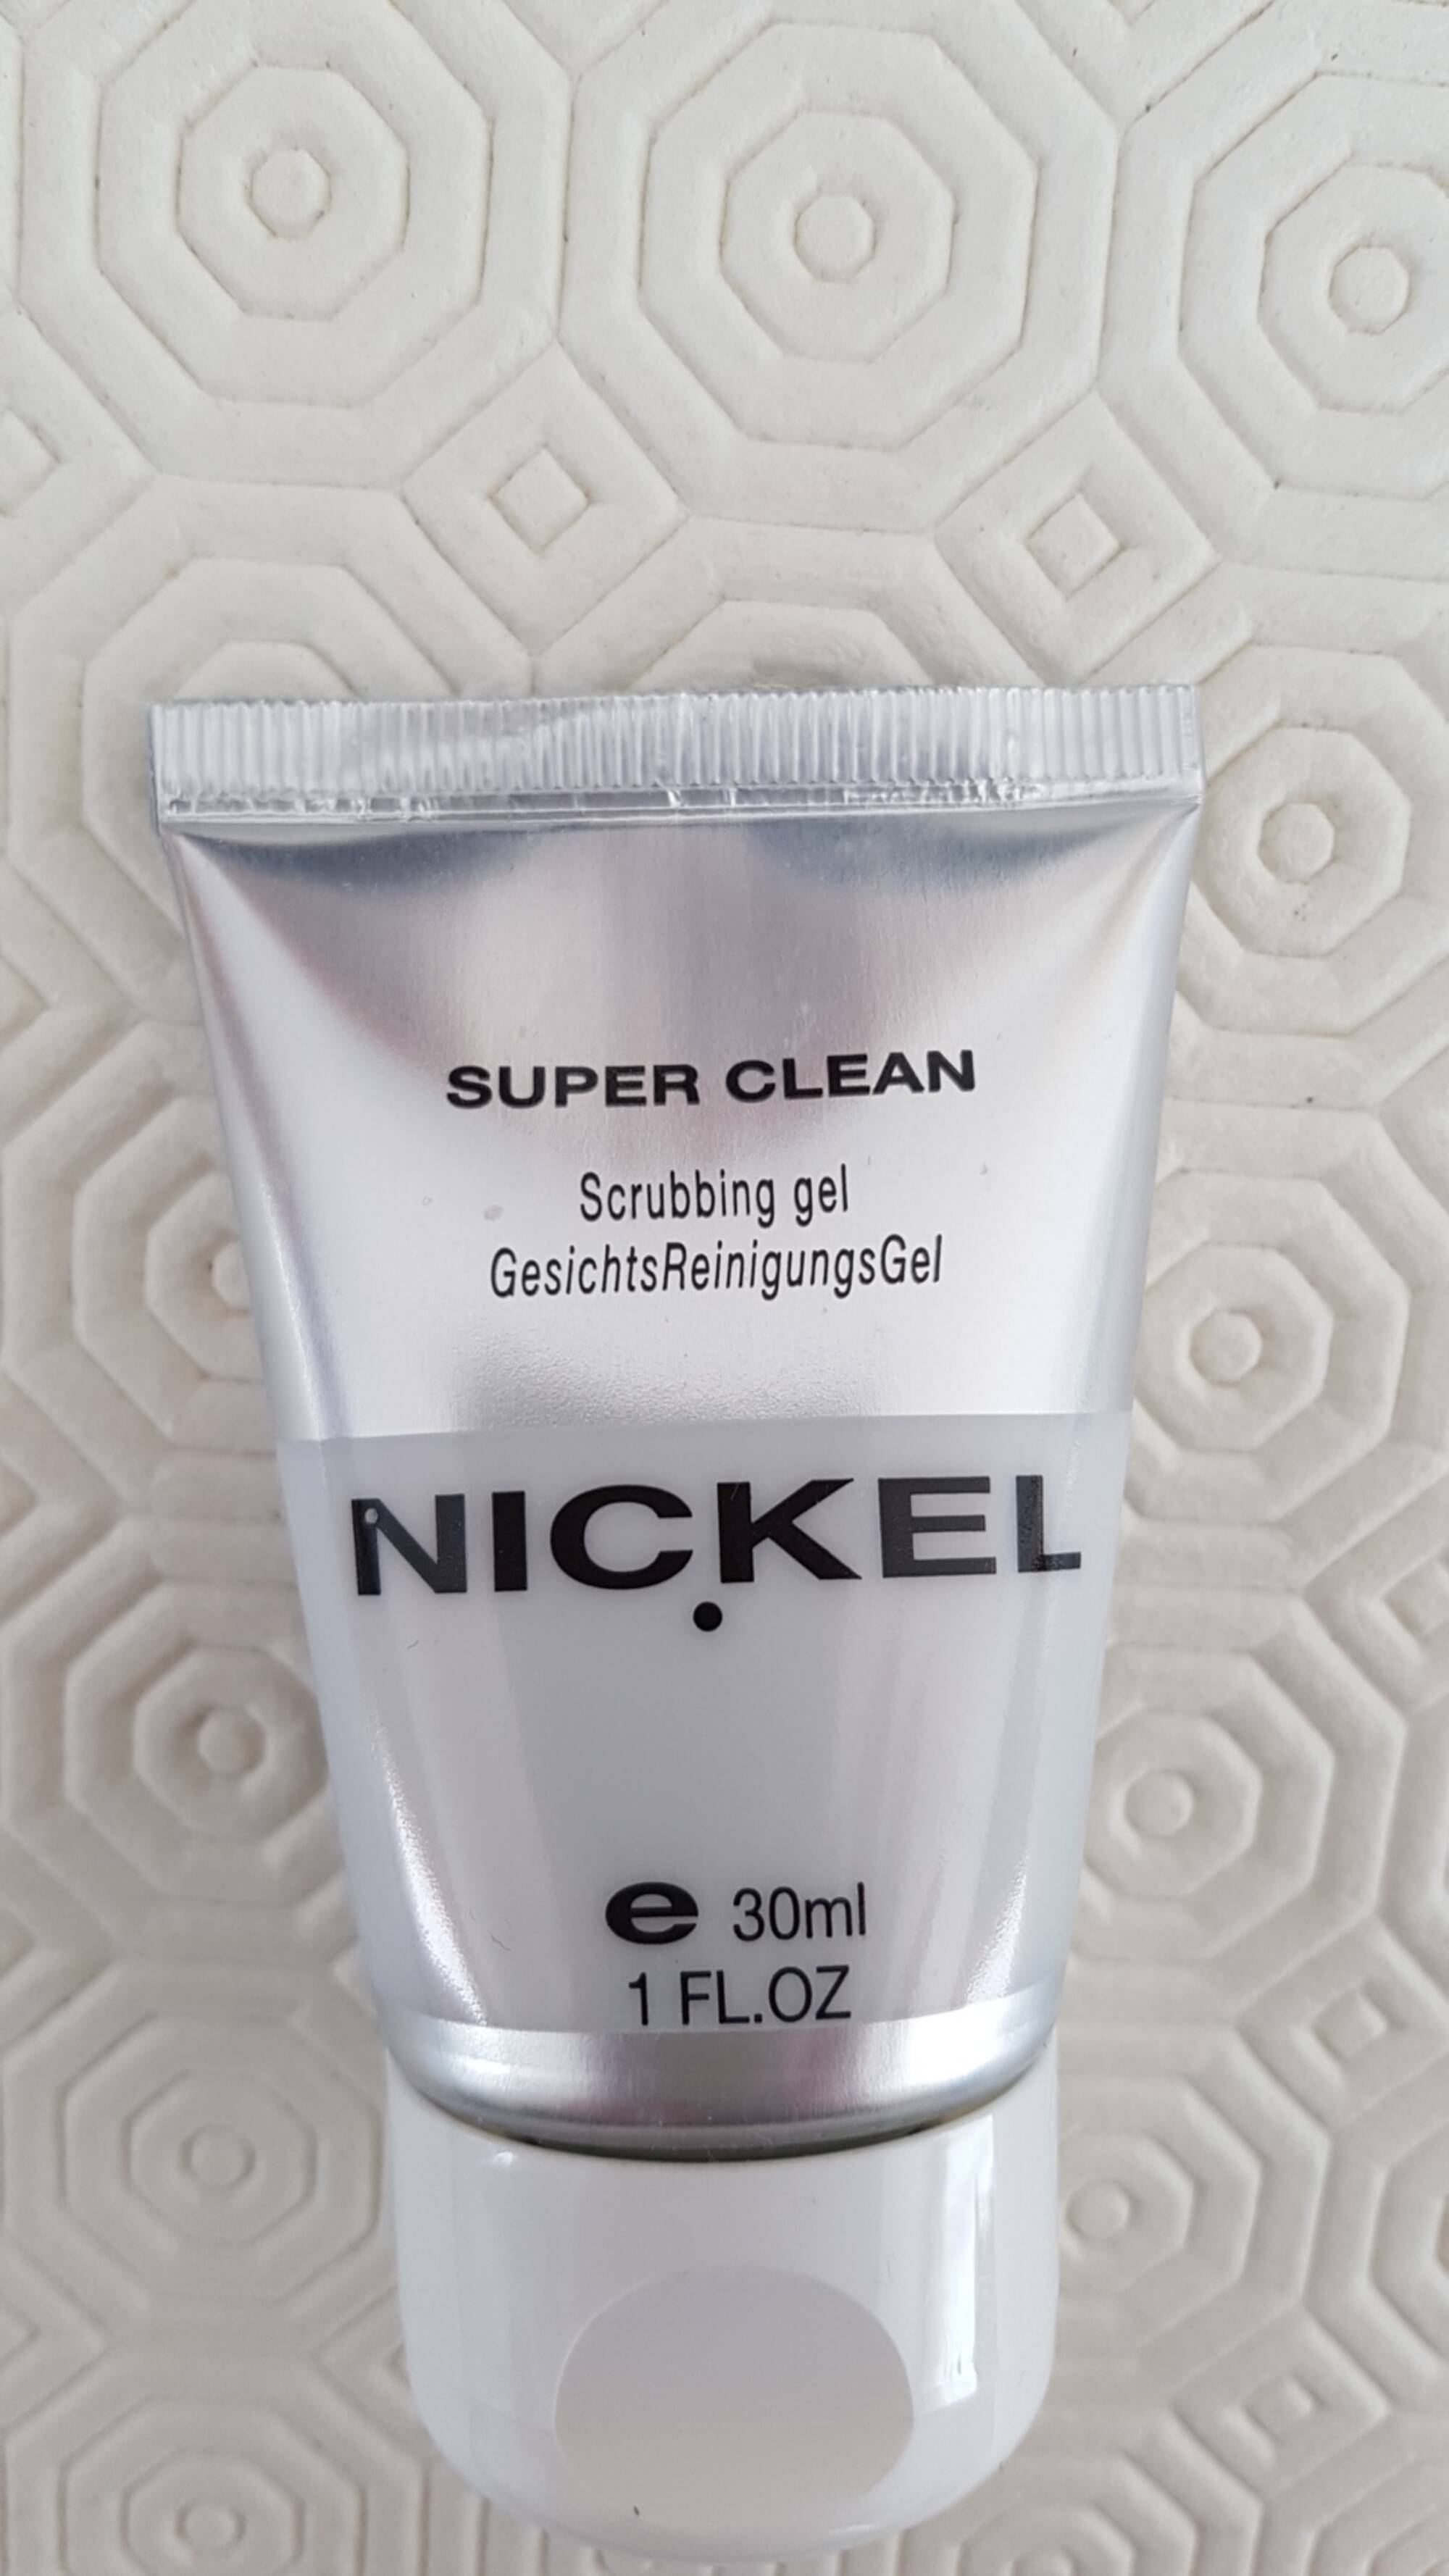 NICKEL - Super clean - Scrubbing gel